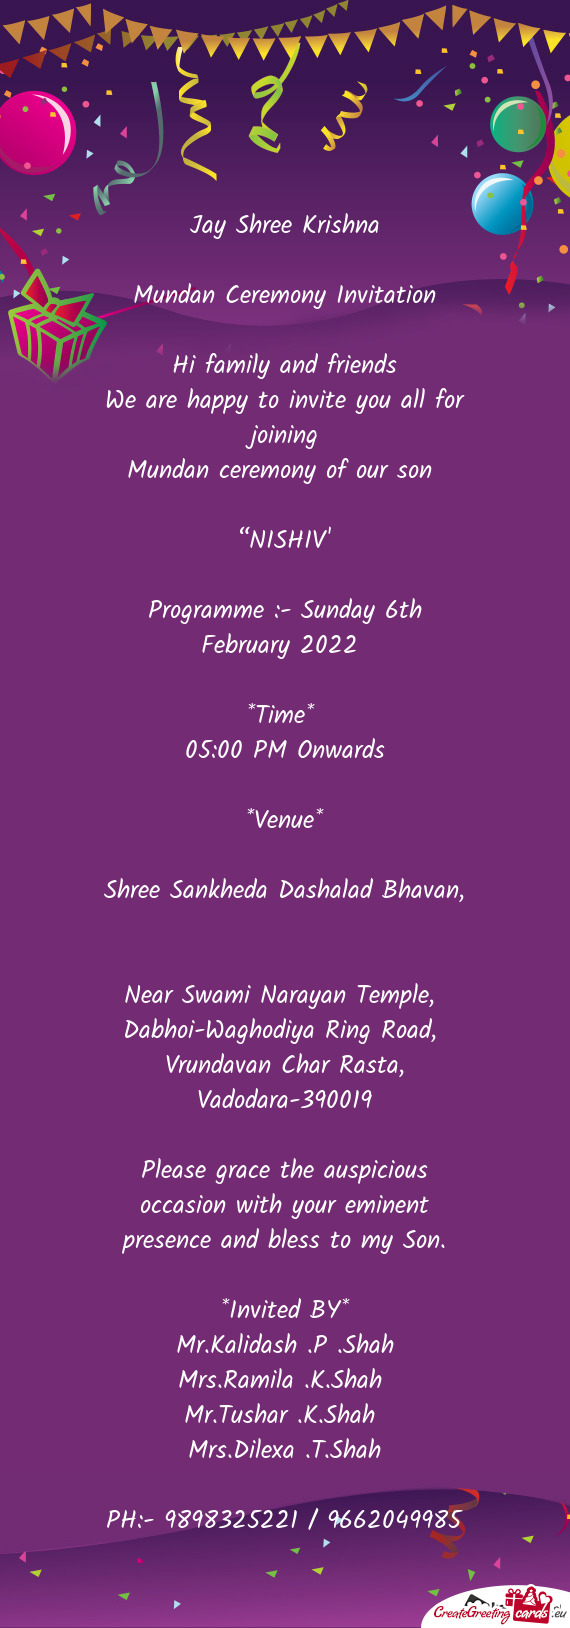 Programme :- Sunday 6th February 2022